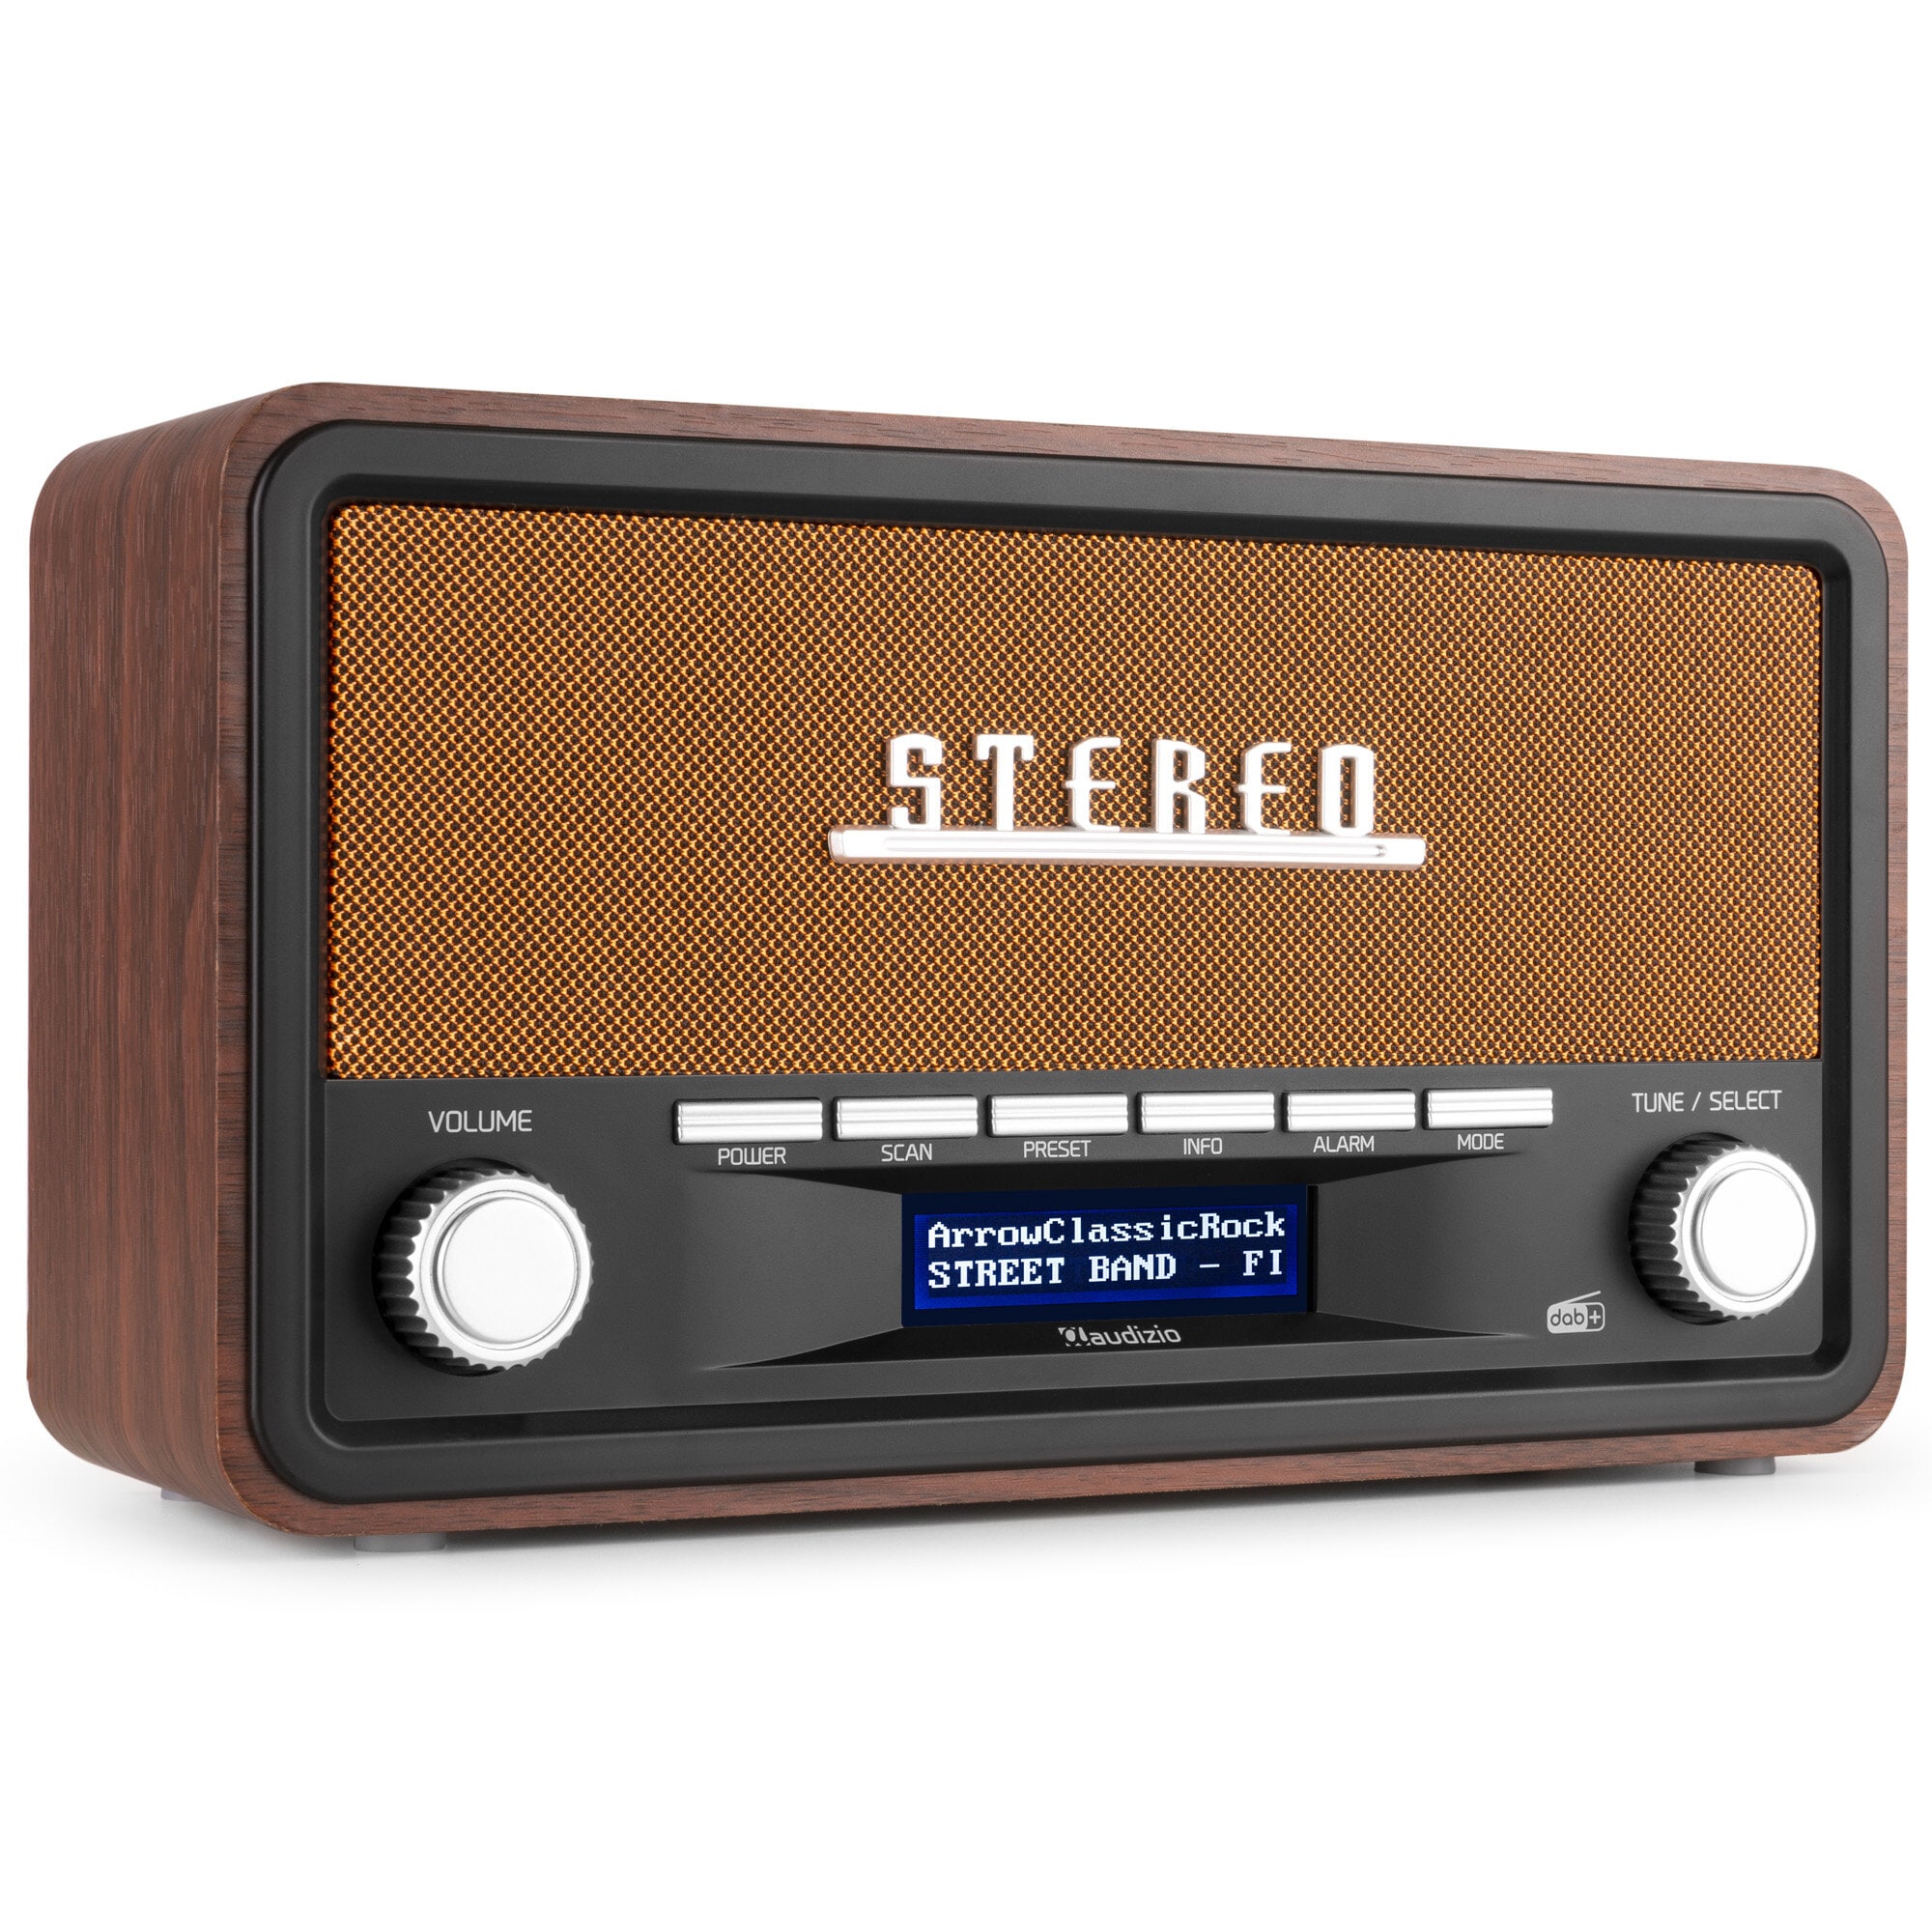 Audizio Foggia retro DAB+ radio med Bluetooth - Bärbar stereoradio med larm - 50W Peak effekt 